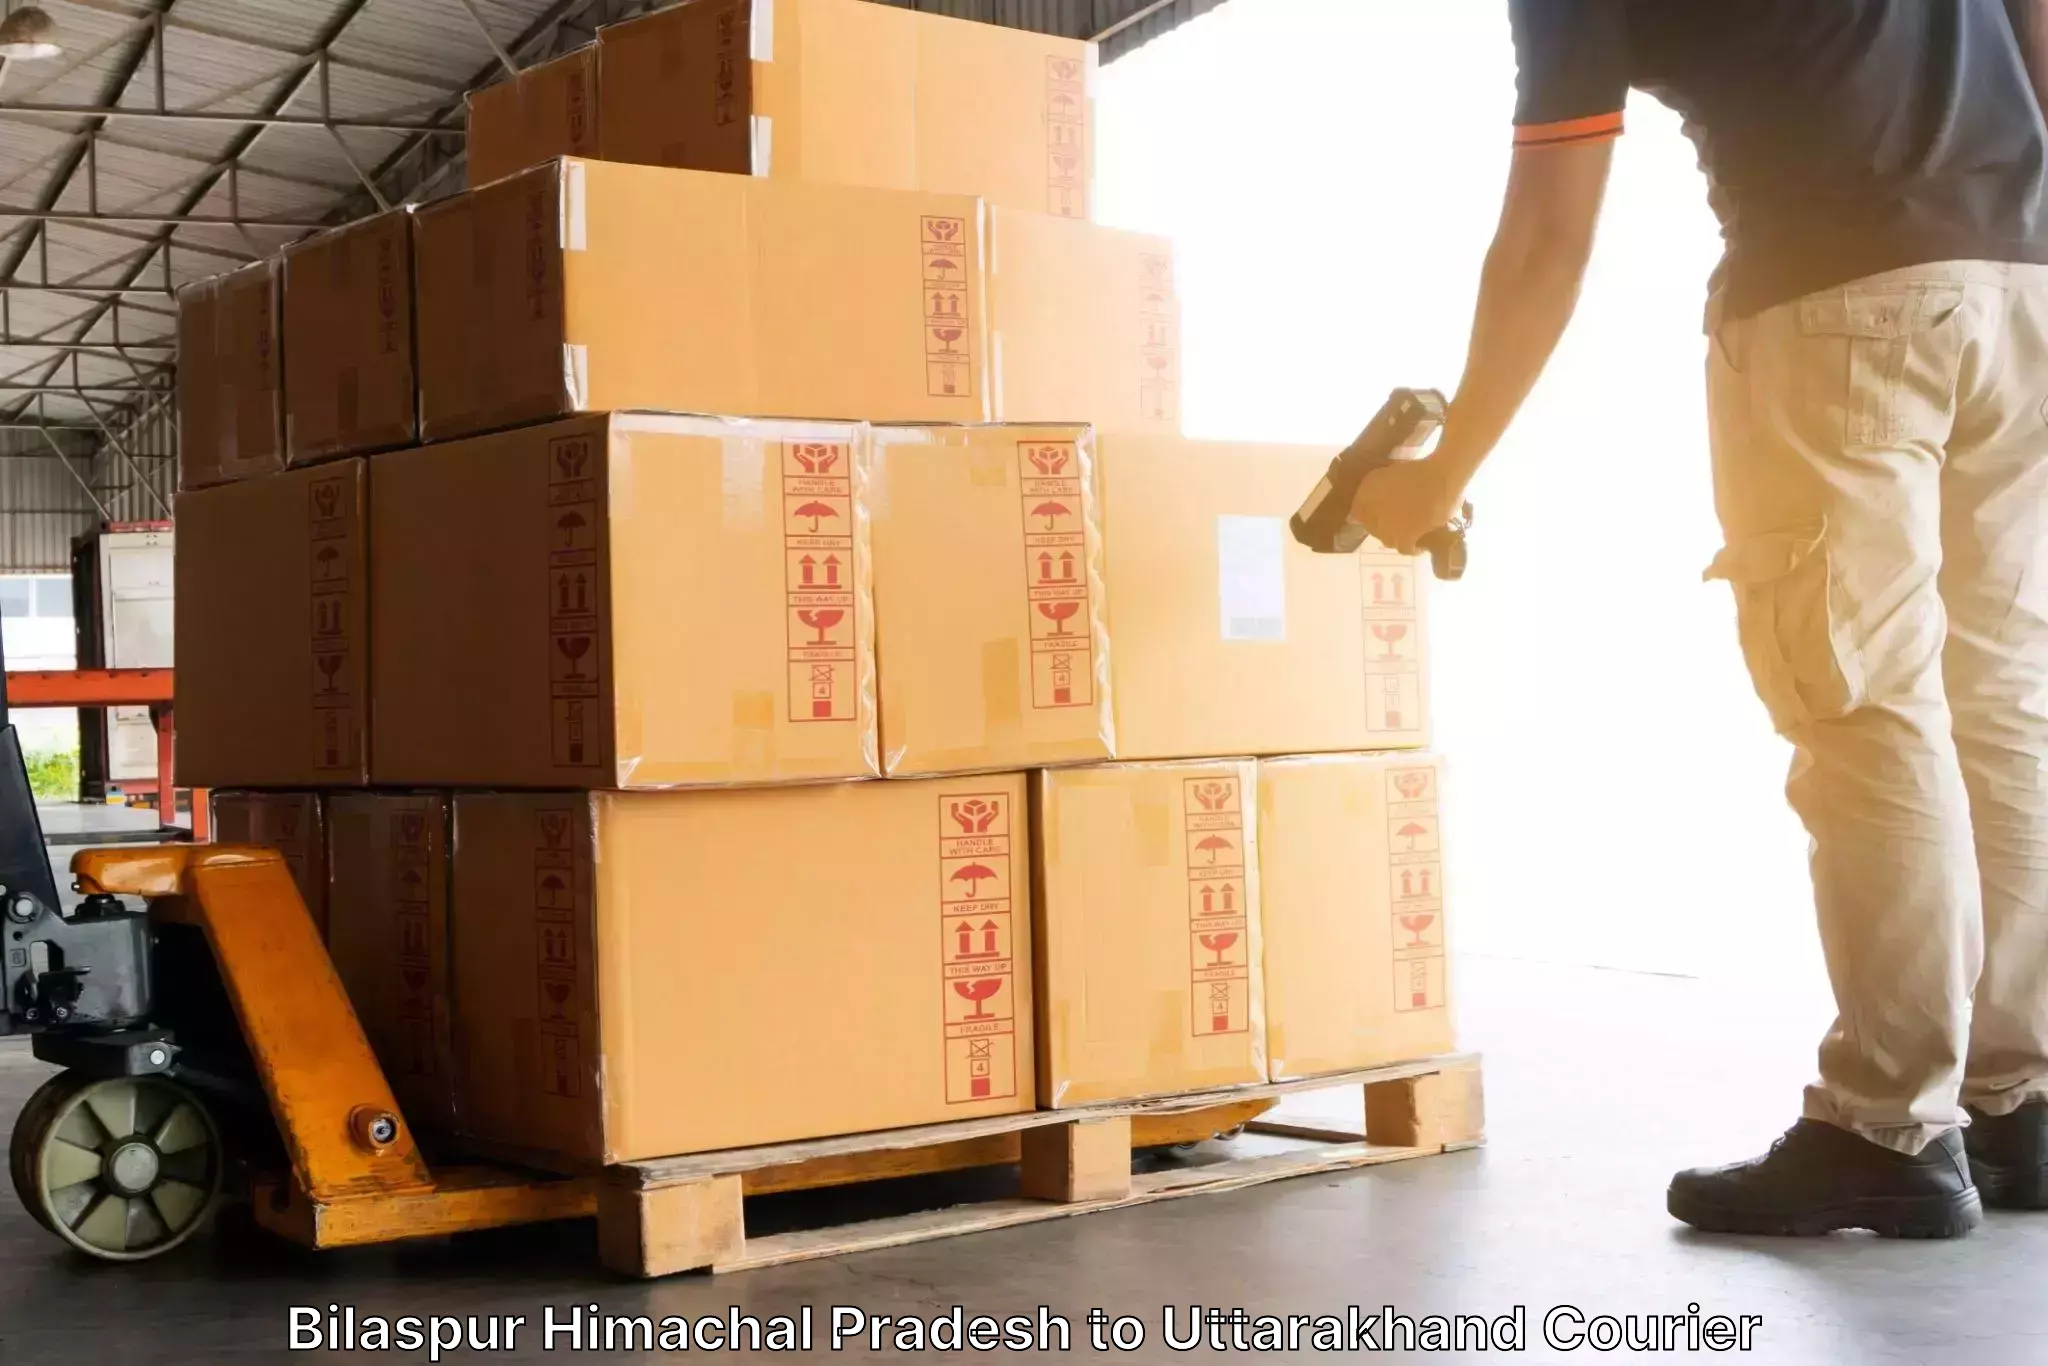 Package delivery network Bilaspur Himachal Pradesh to Doiwala